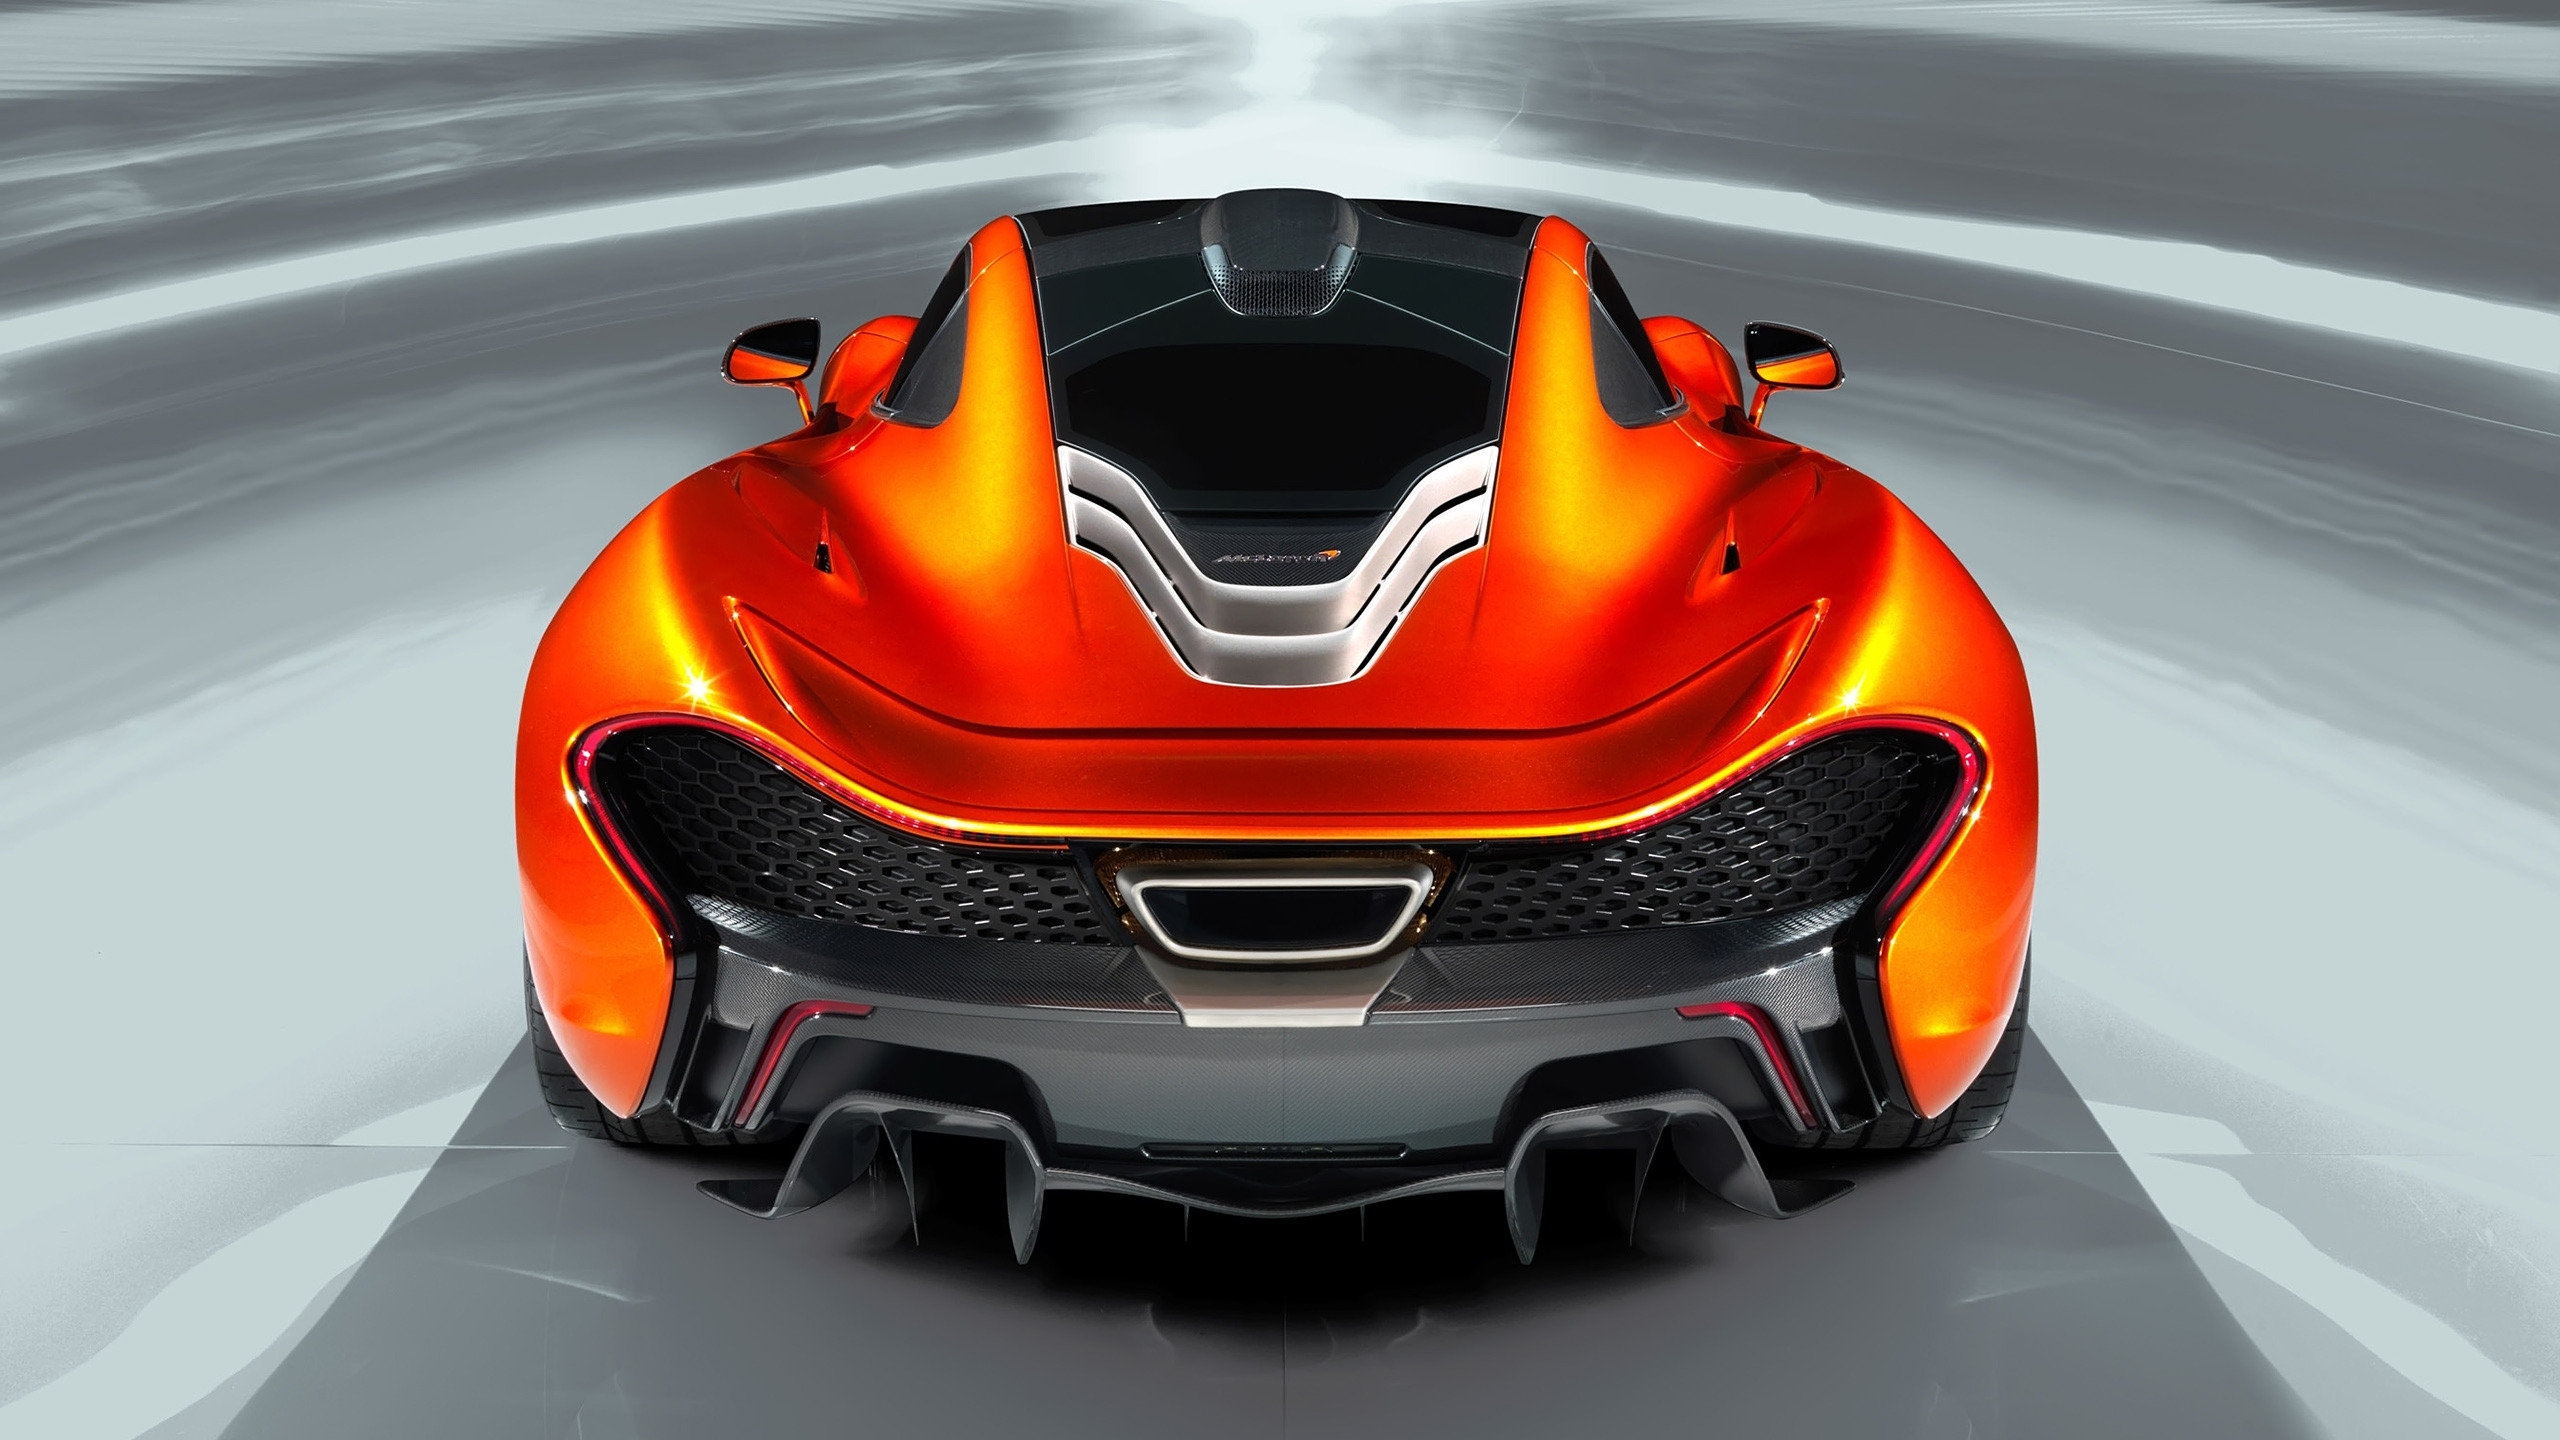 McLaren P1 Concept Car for 2560x1440 HDTV resolution